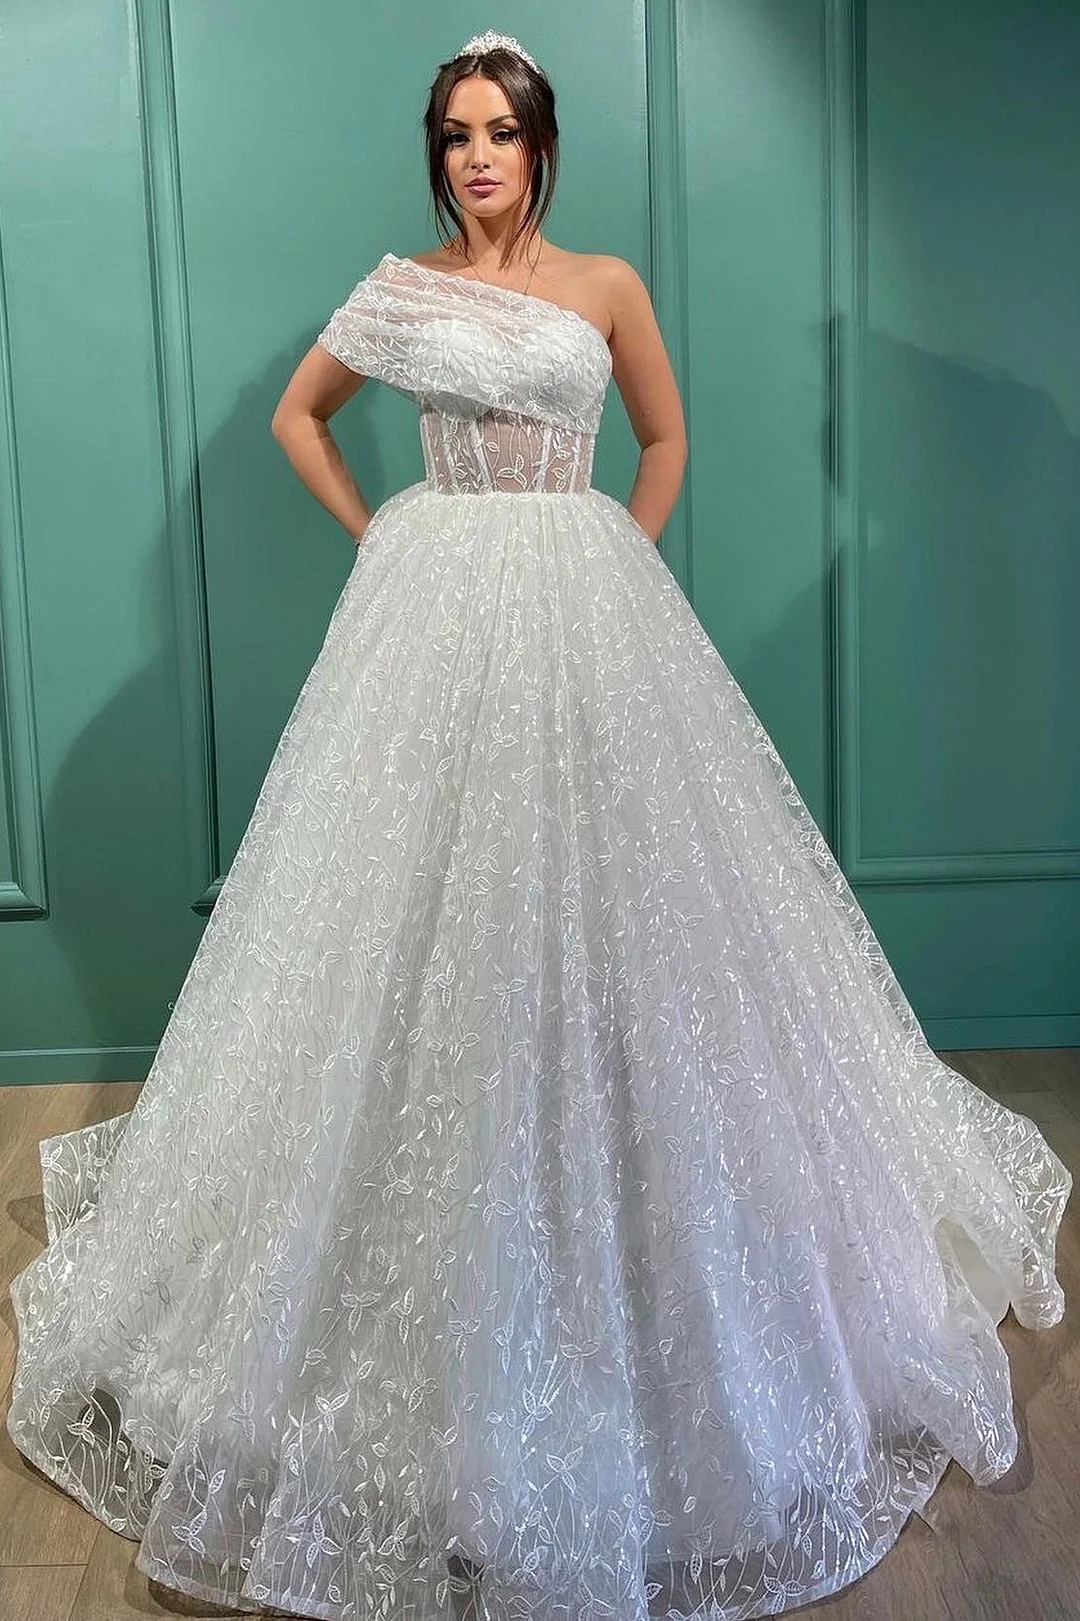 Scoop Neckline Ball Gown Wedding Dress Crystal Beads Glitter Wedding D –  AiSO BRiDAL